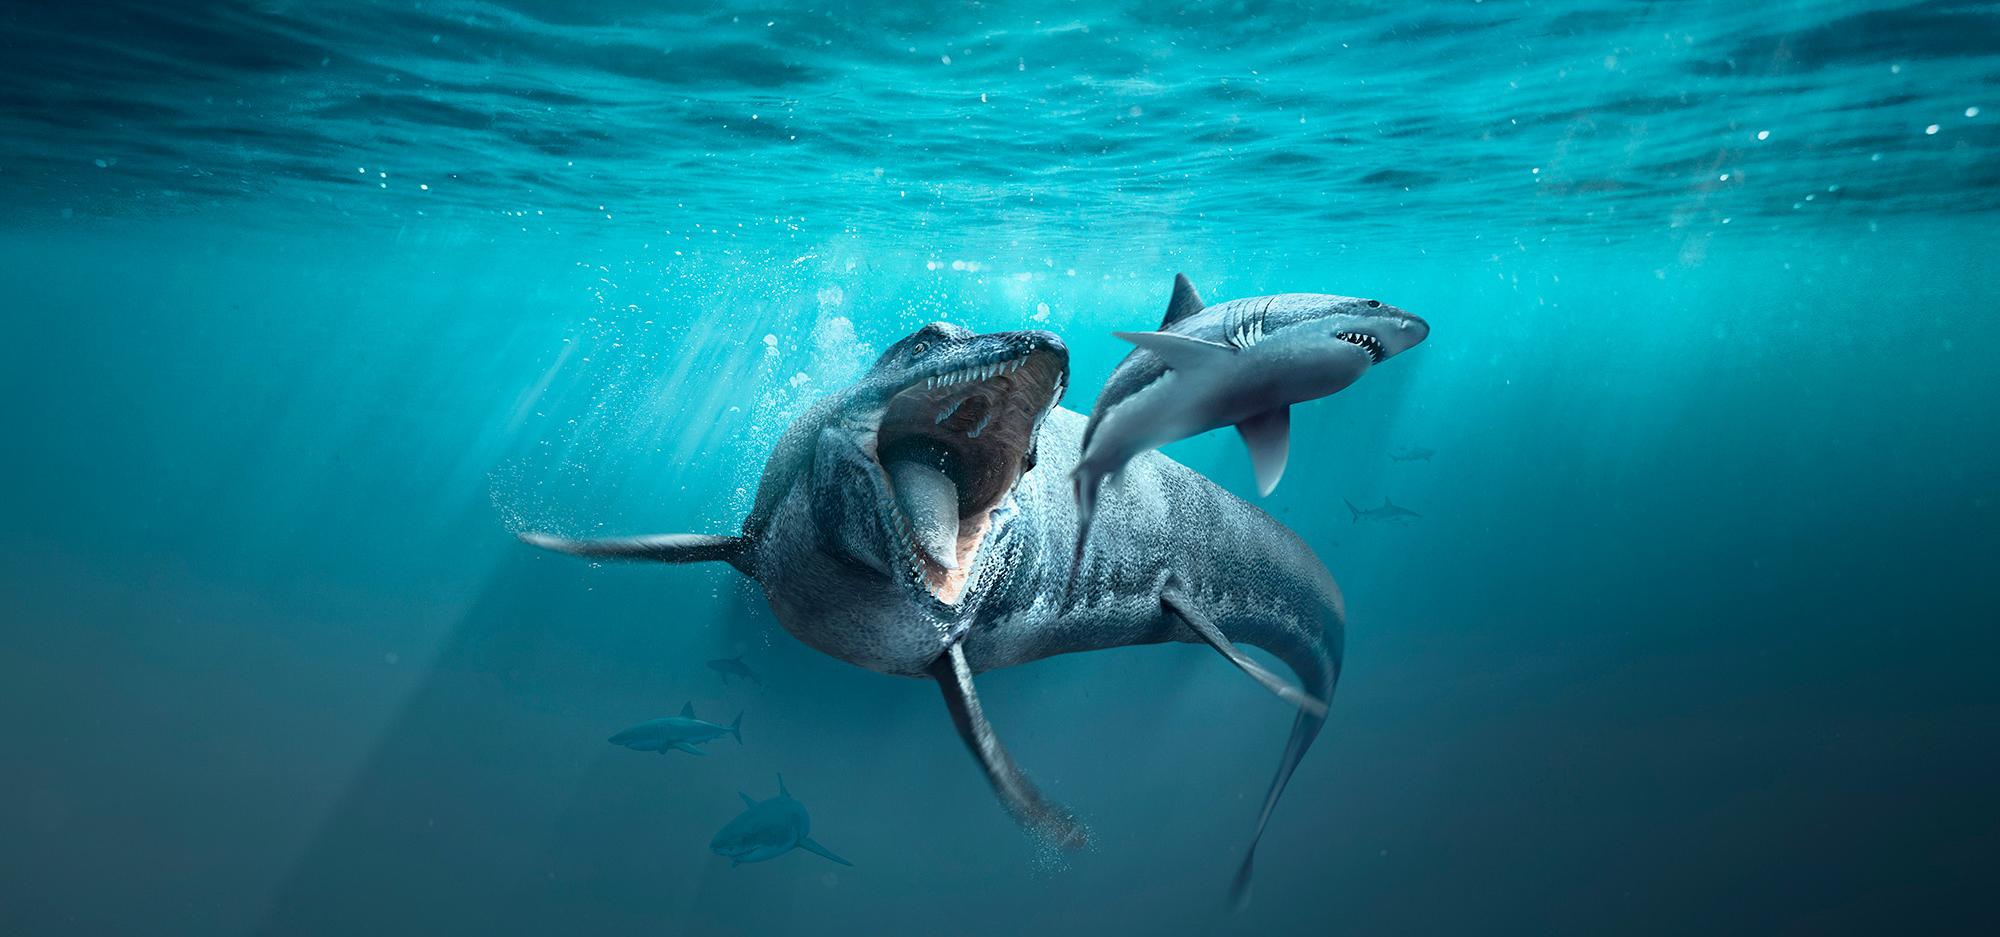 Sea Monsters: Prehistoric Ocean Predators